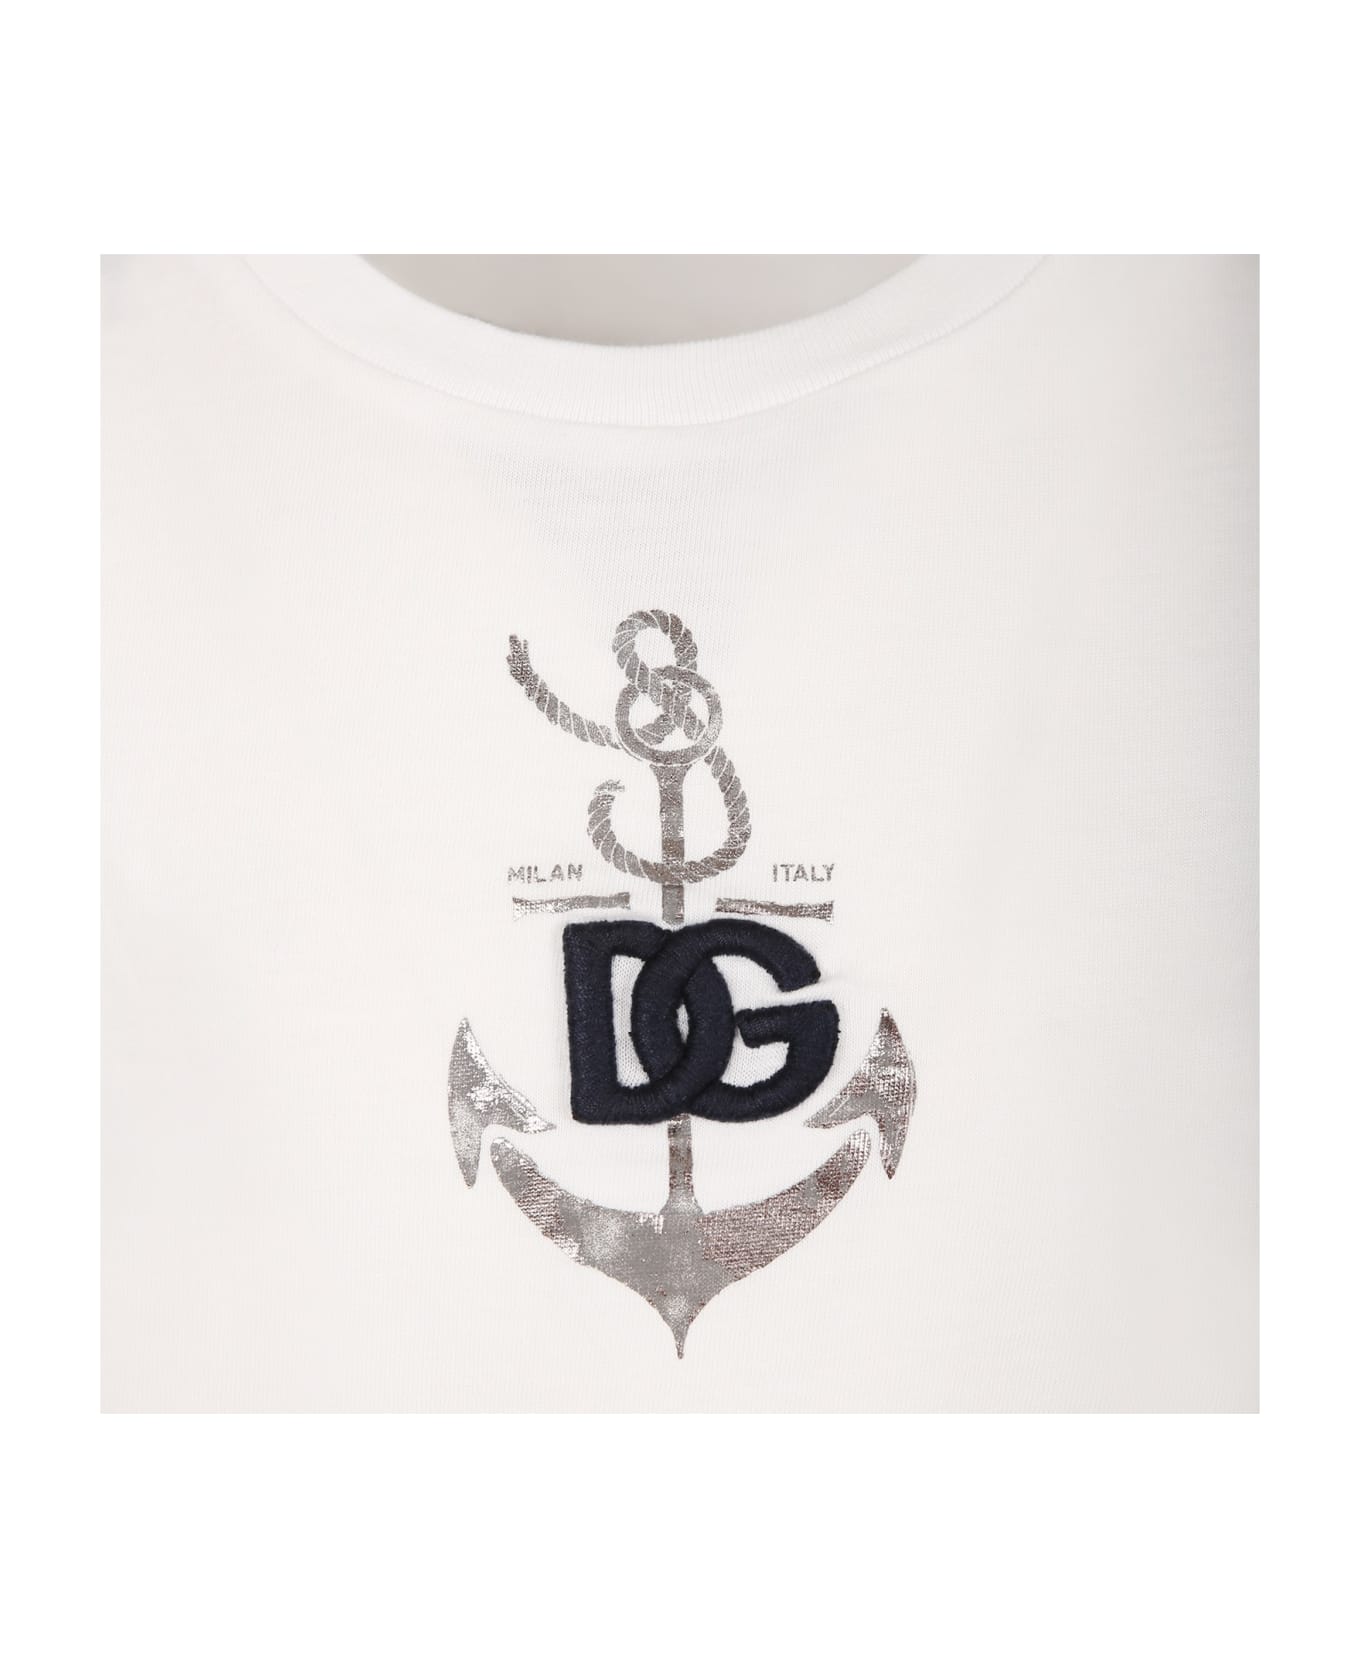 Dolce & Gabbana Whit T-shirt Shorts For Boy With Iconic Monogram - White